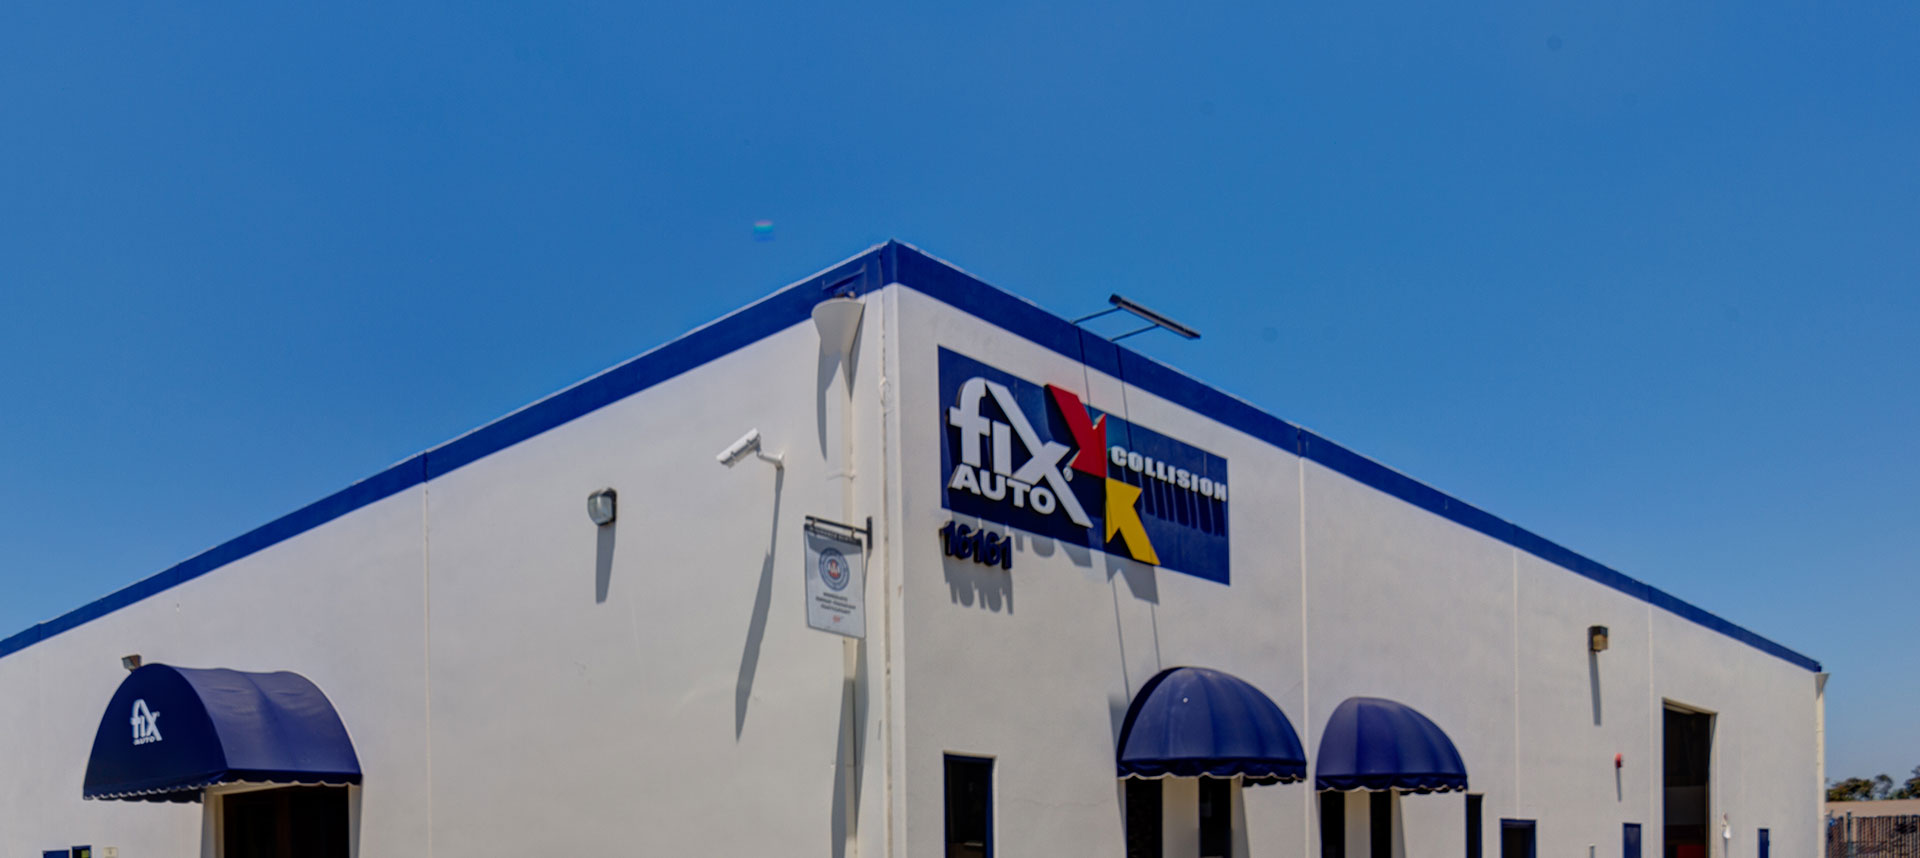 Fix Auto Irvine Auto Body Shop Sign and Building Exterior